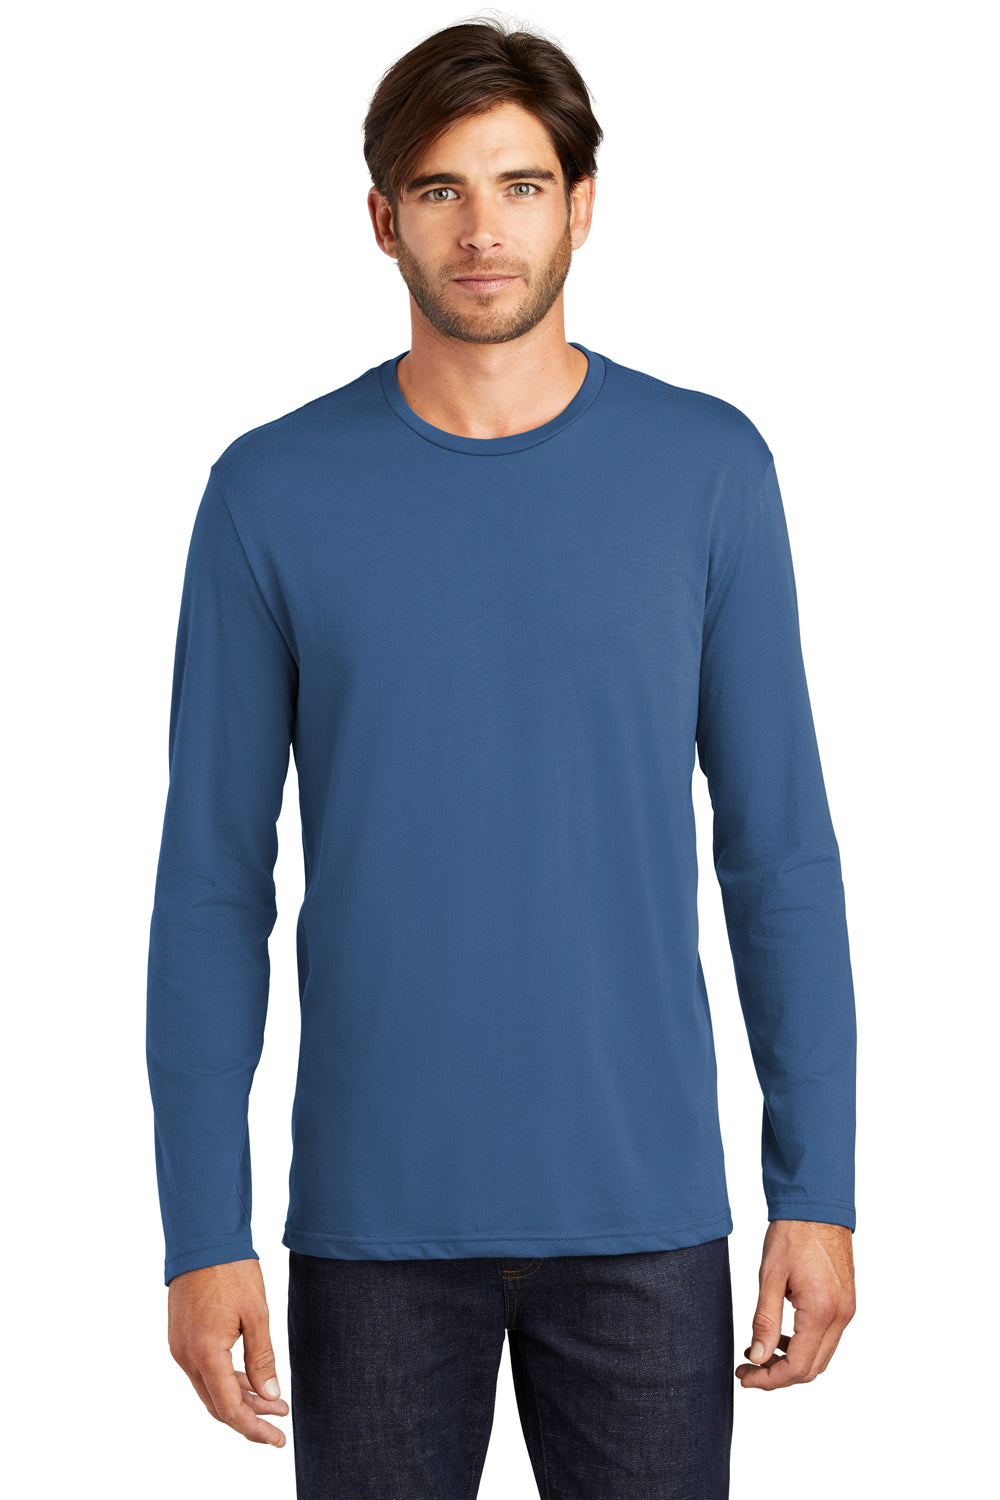 District DT105 Mens Perfect Weight Long Sleeve Crewneck T-Shirt Maritime Blue Front